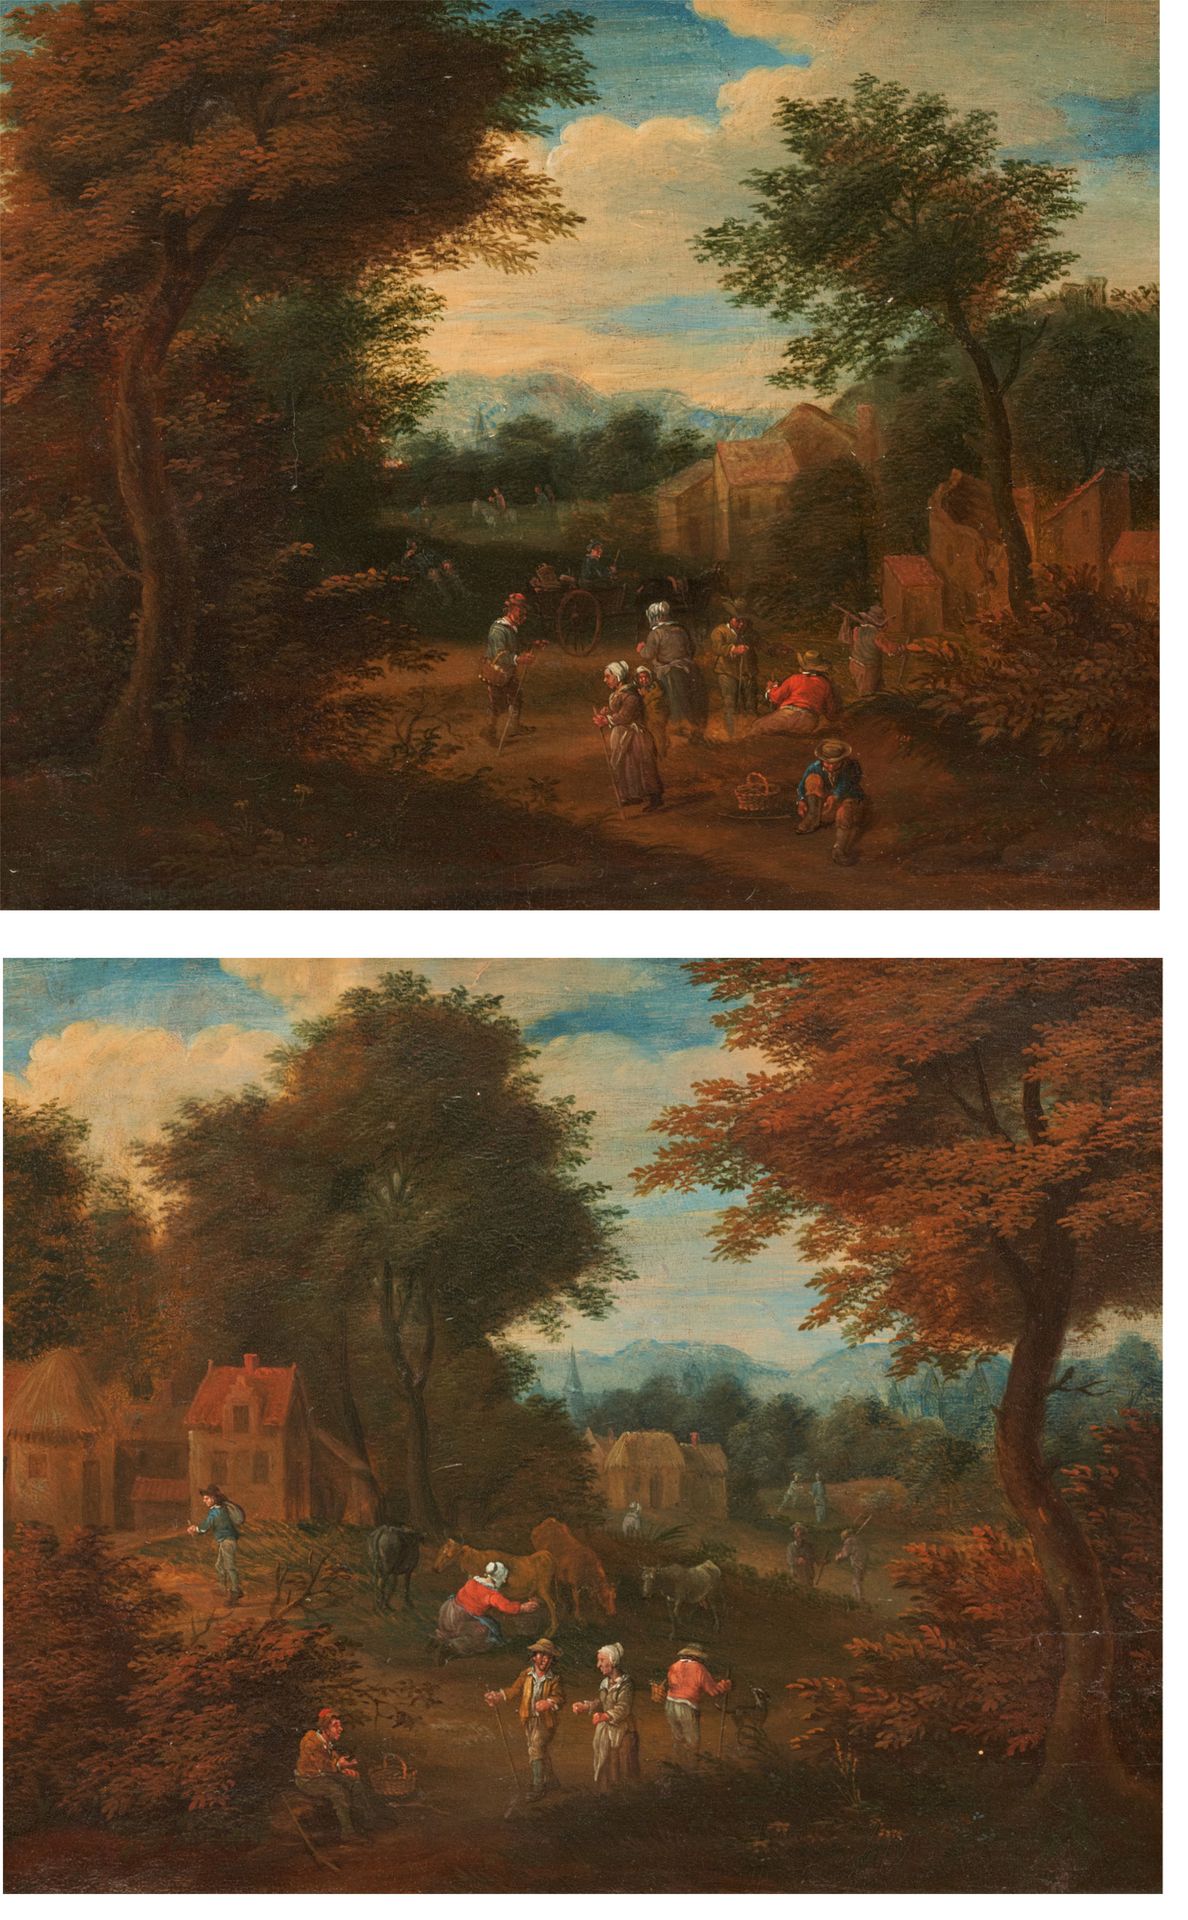 Flämische Schule FLÄMISCHE SCHULE
17世纪。
题目： 两幅画：有人物的森林风景画。
技术： 木头上的油画。
尺寸： 23 x &hellip;